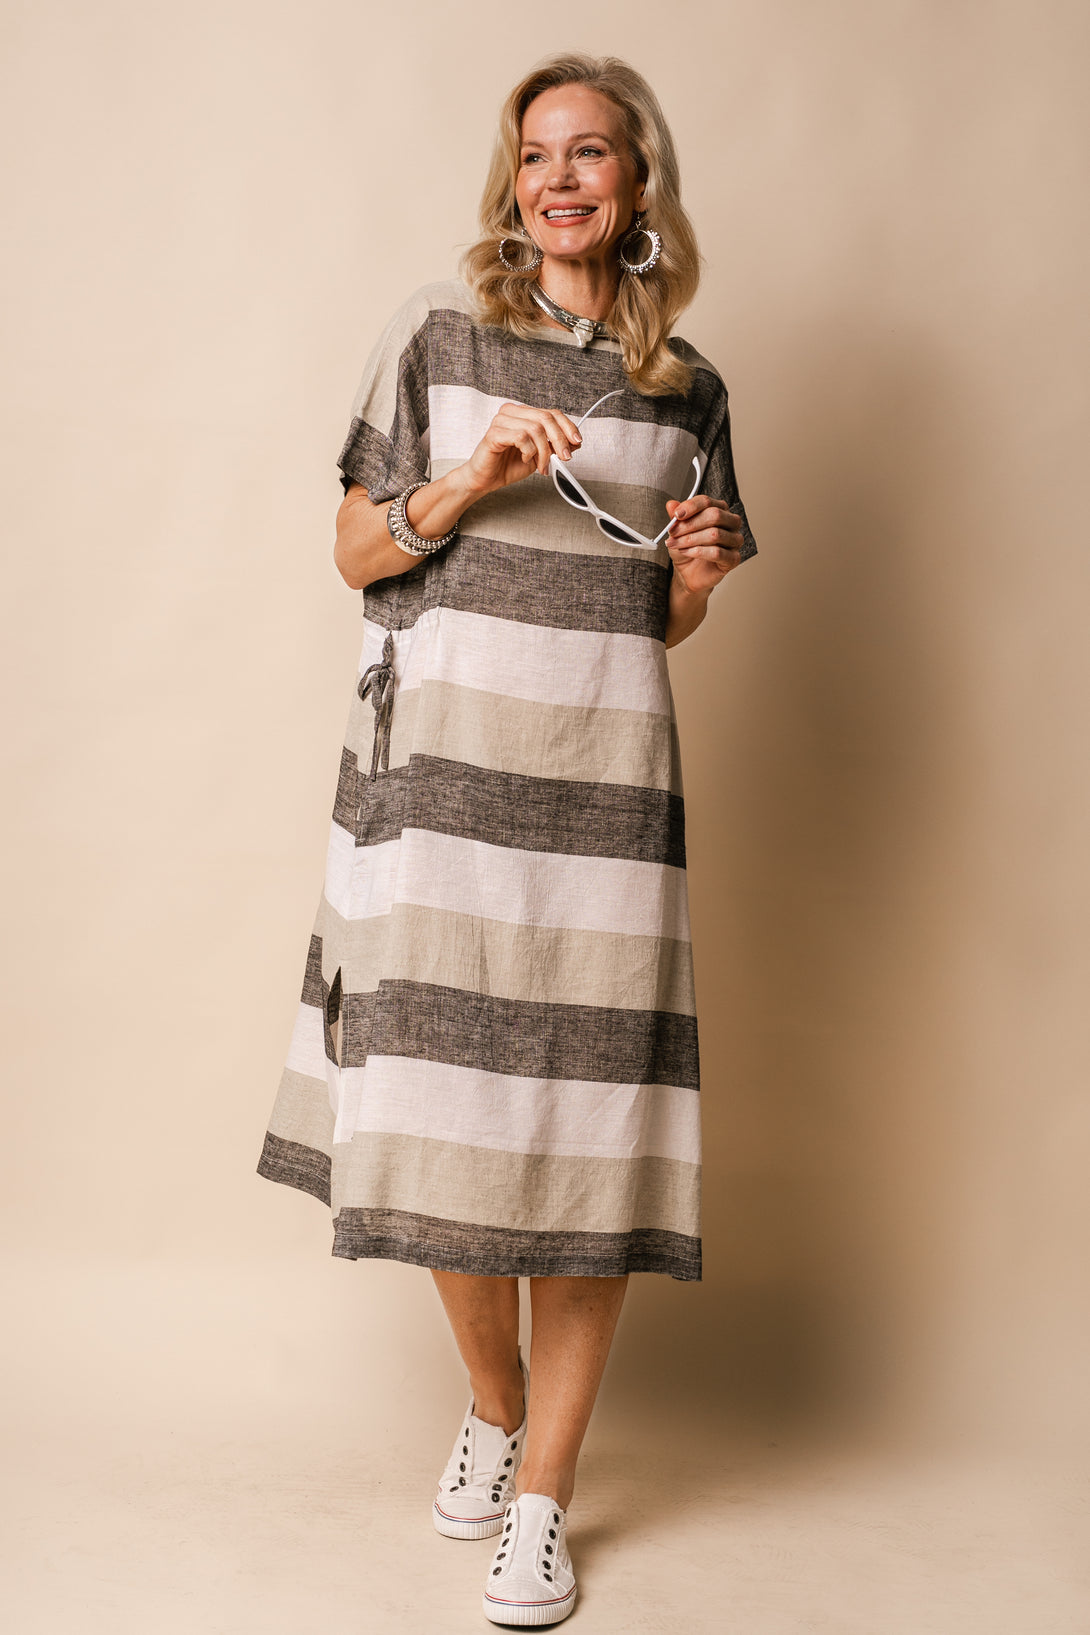 Moxie Linen Blend Dress in Latte - Imagine Fashion